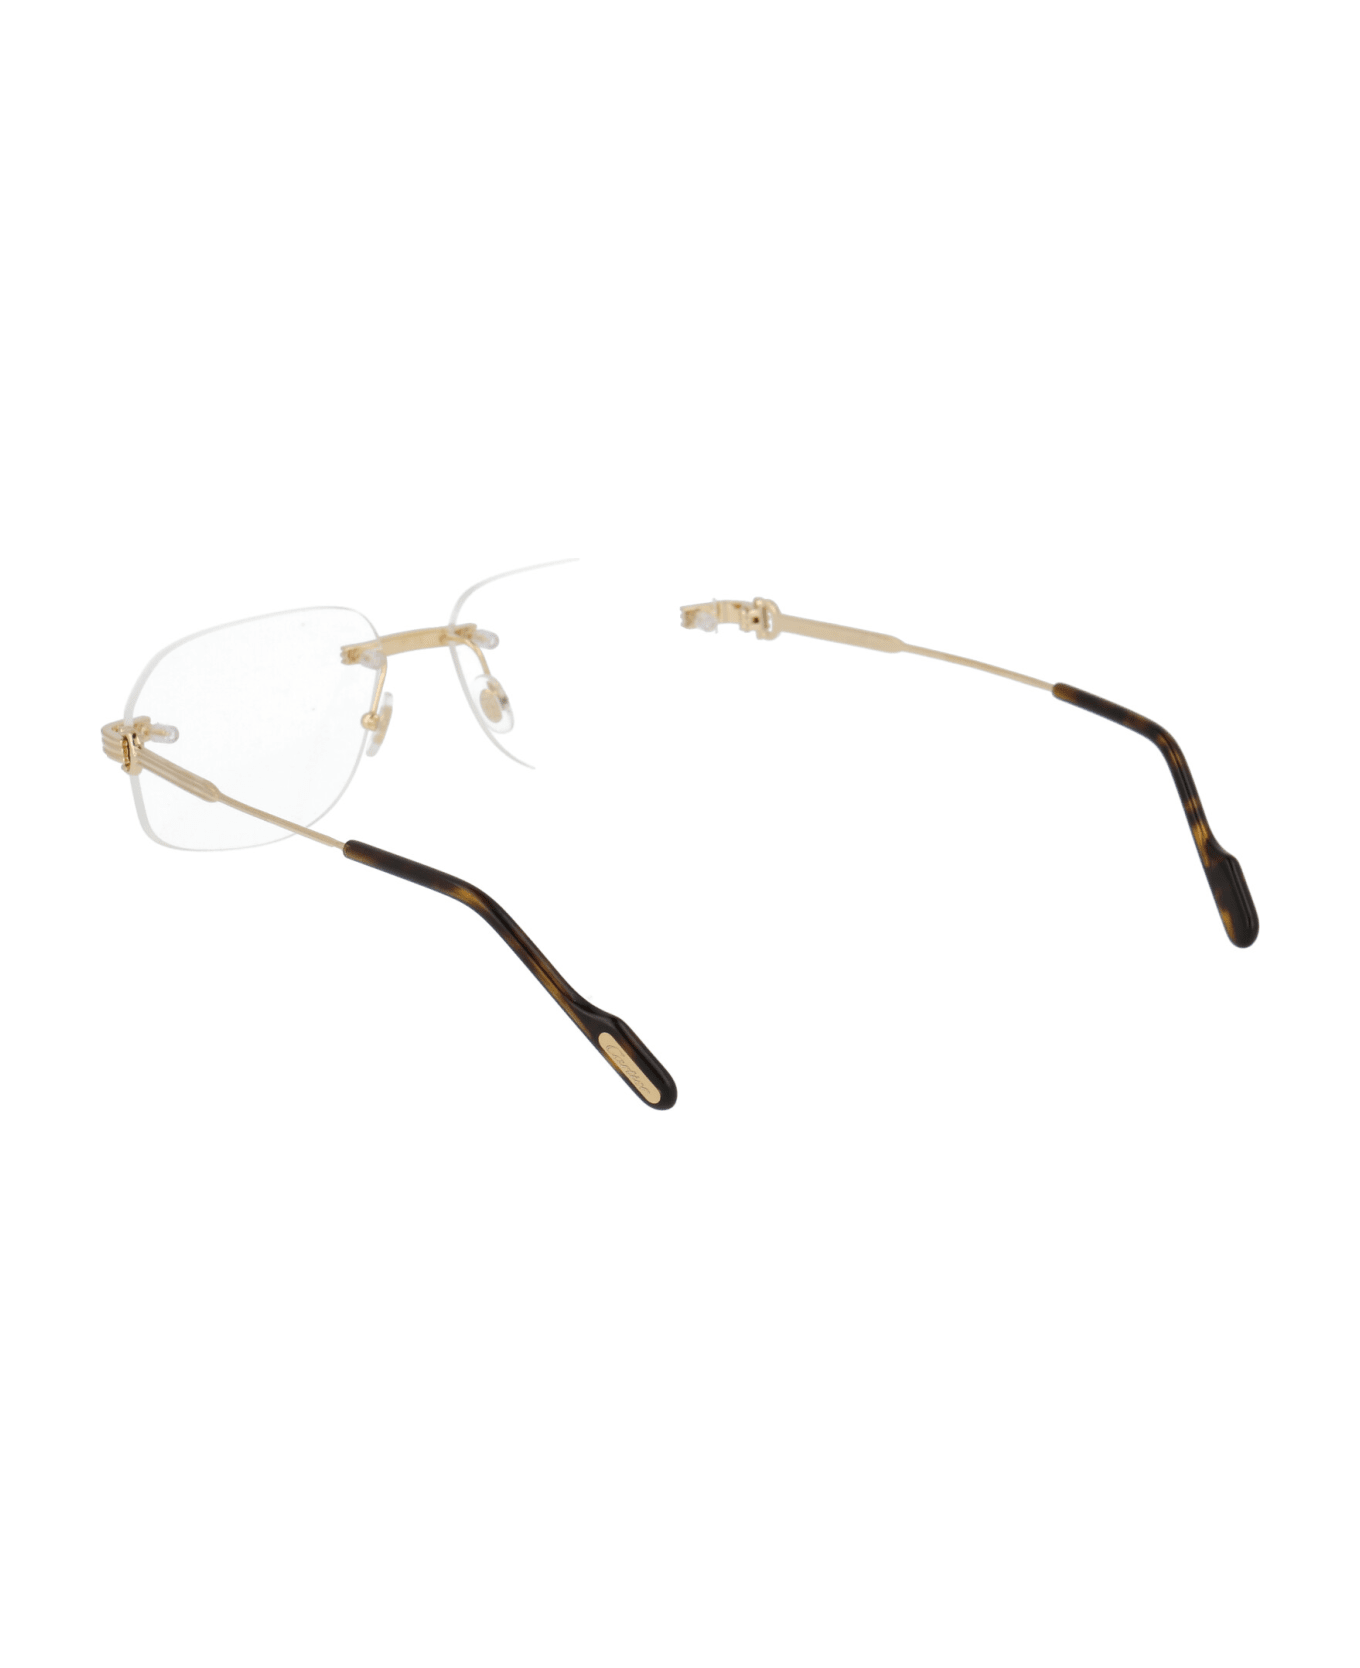 Cartier Eyewear Ct0284o Glasses - 002 GOLD GOLD TRANSPARENT